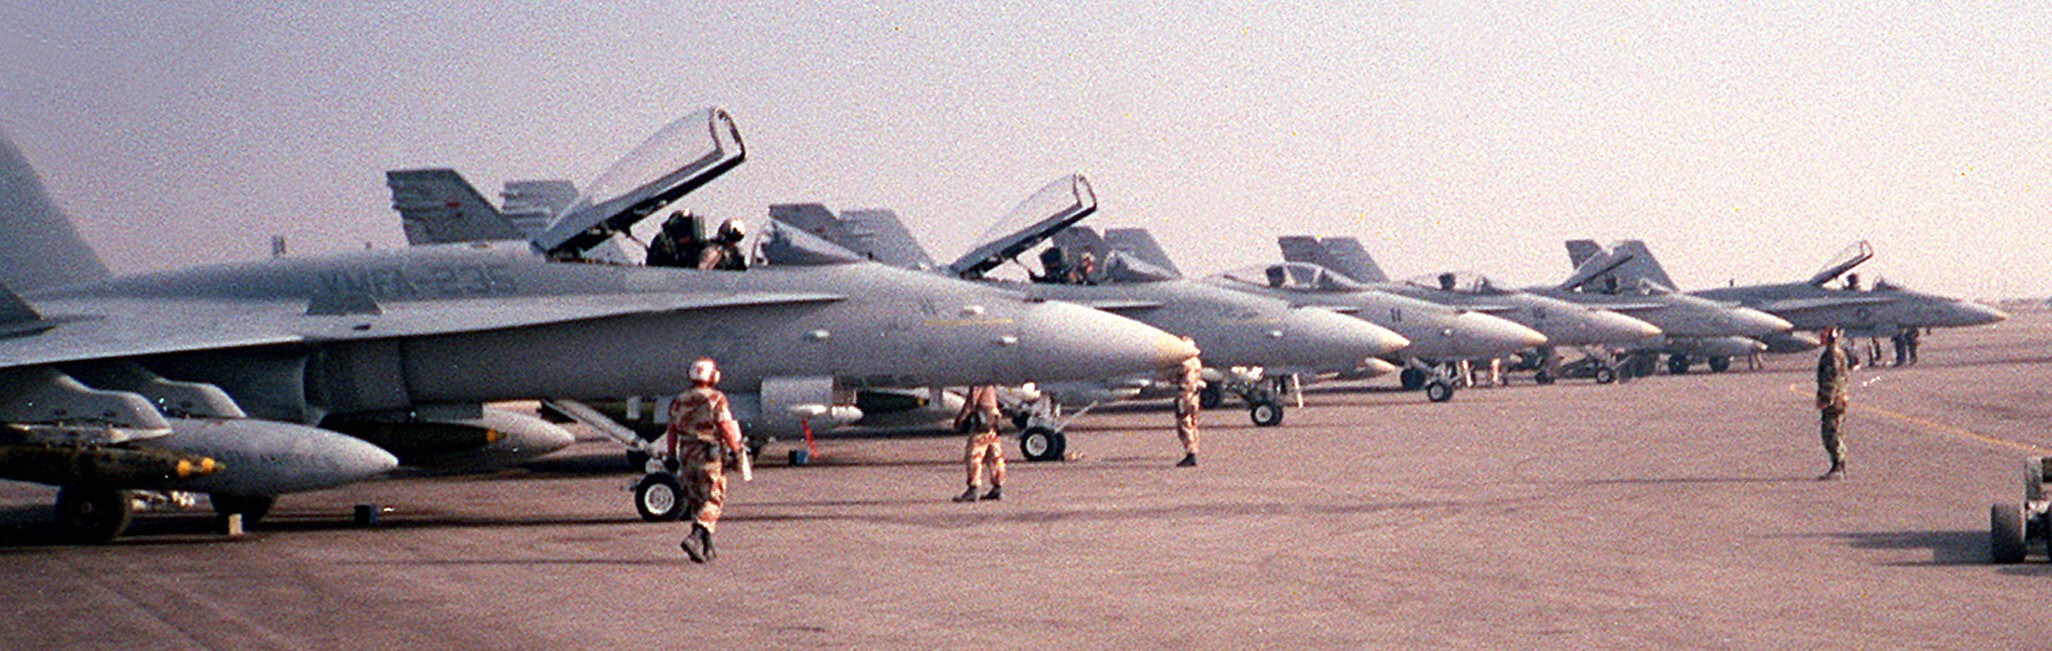 vmfa-235 death angels marine fighter attack squadron usmc f/a-18c hornet operation desert storm 1992 04